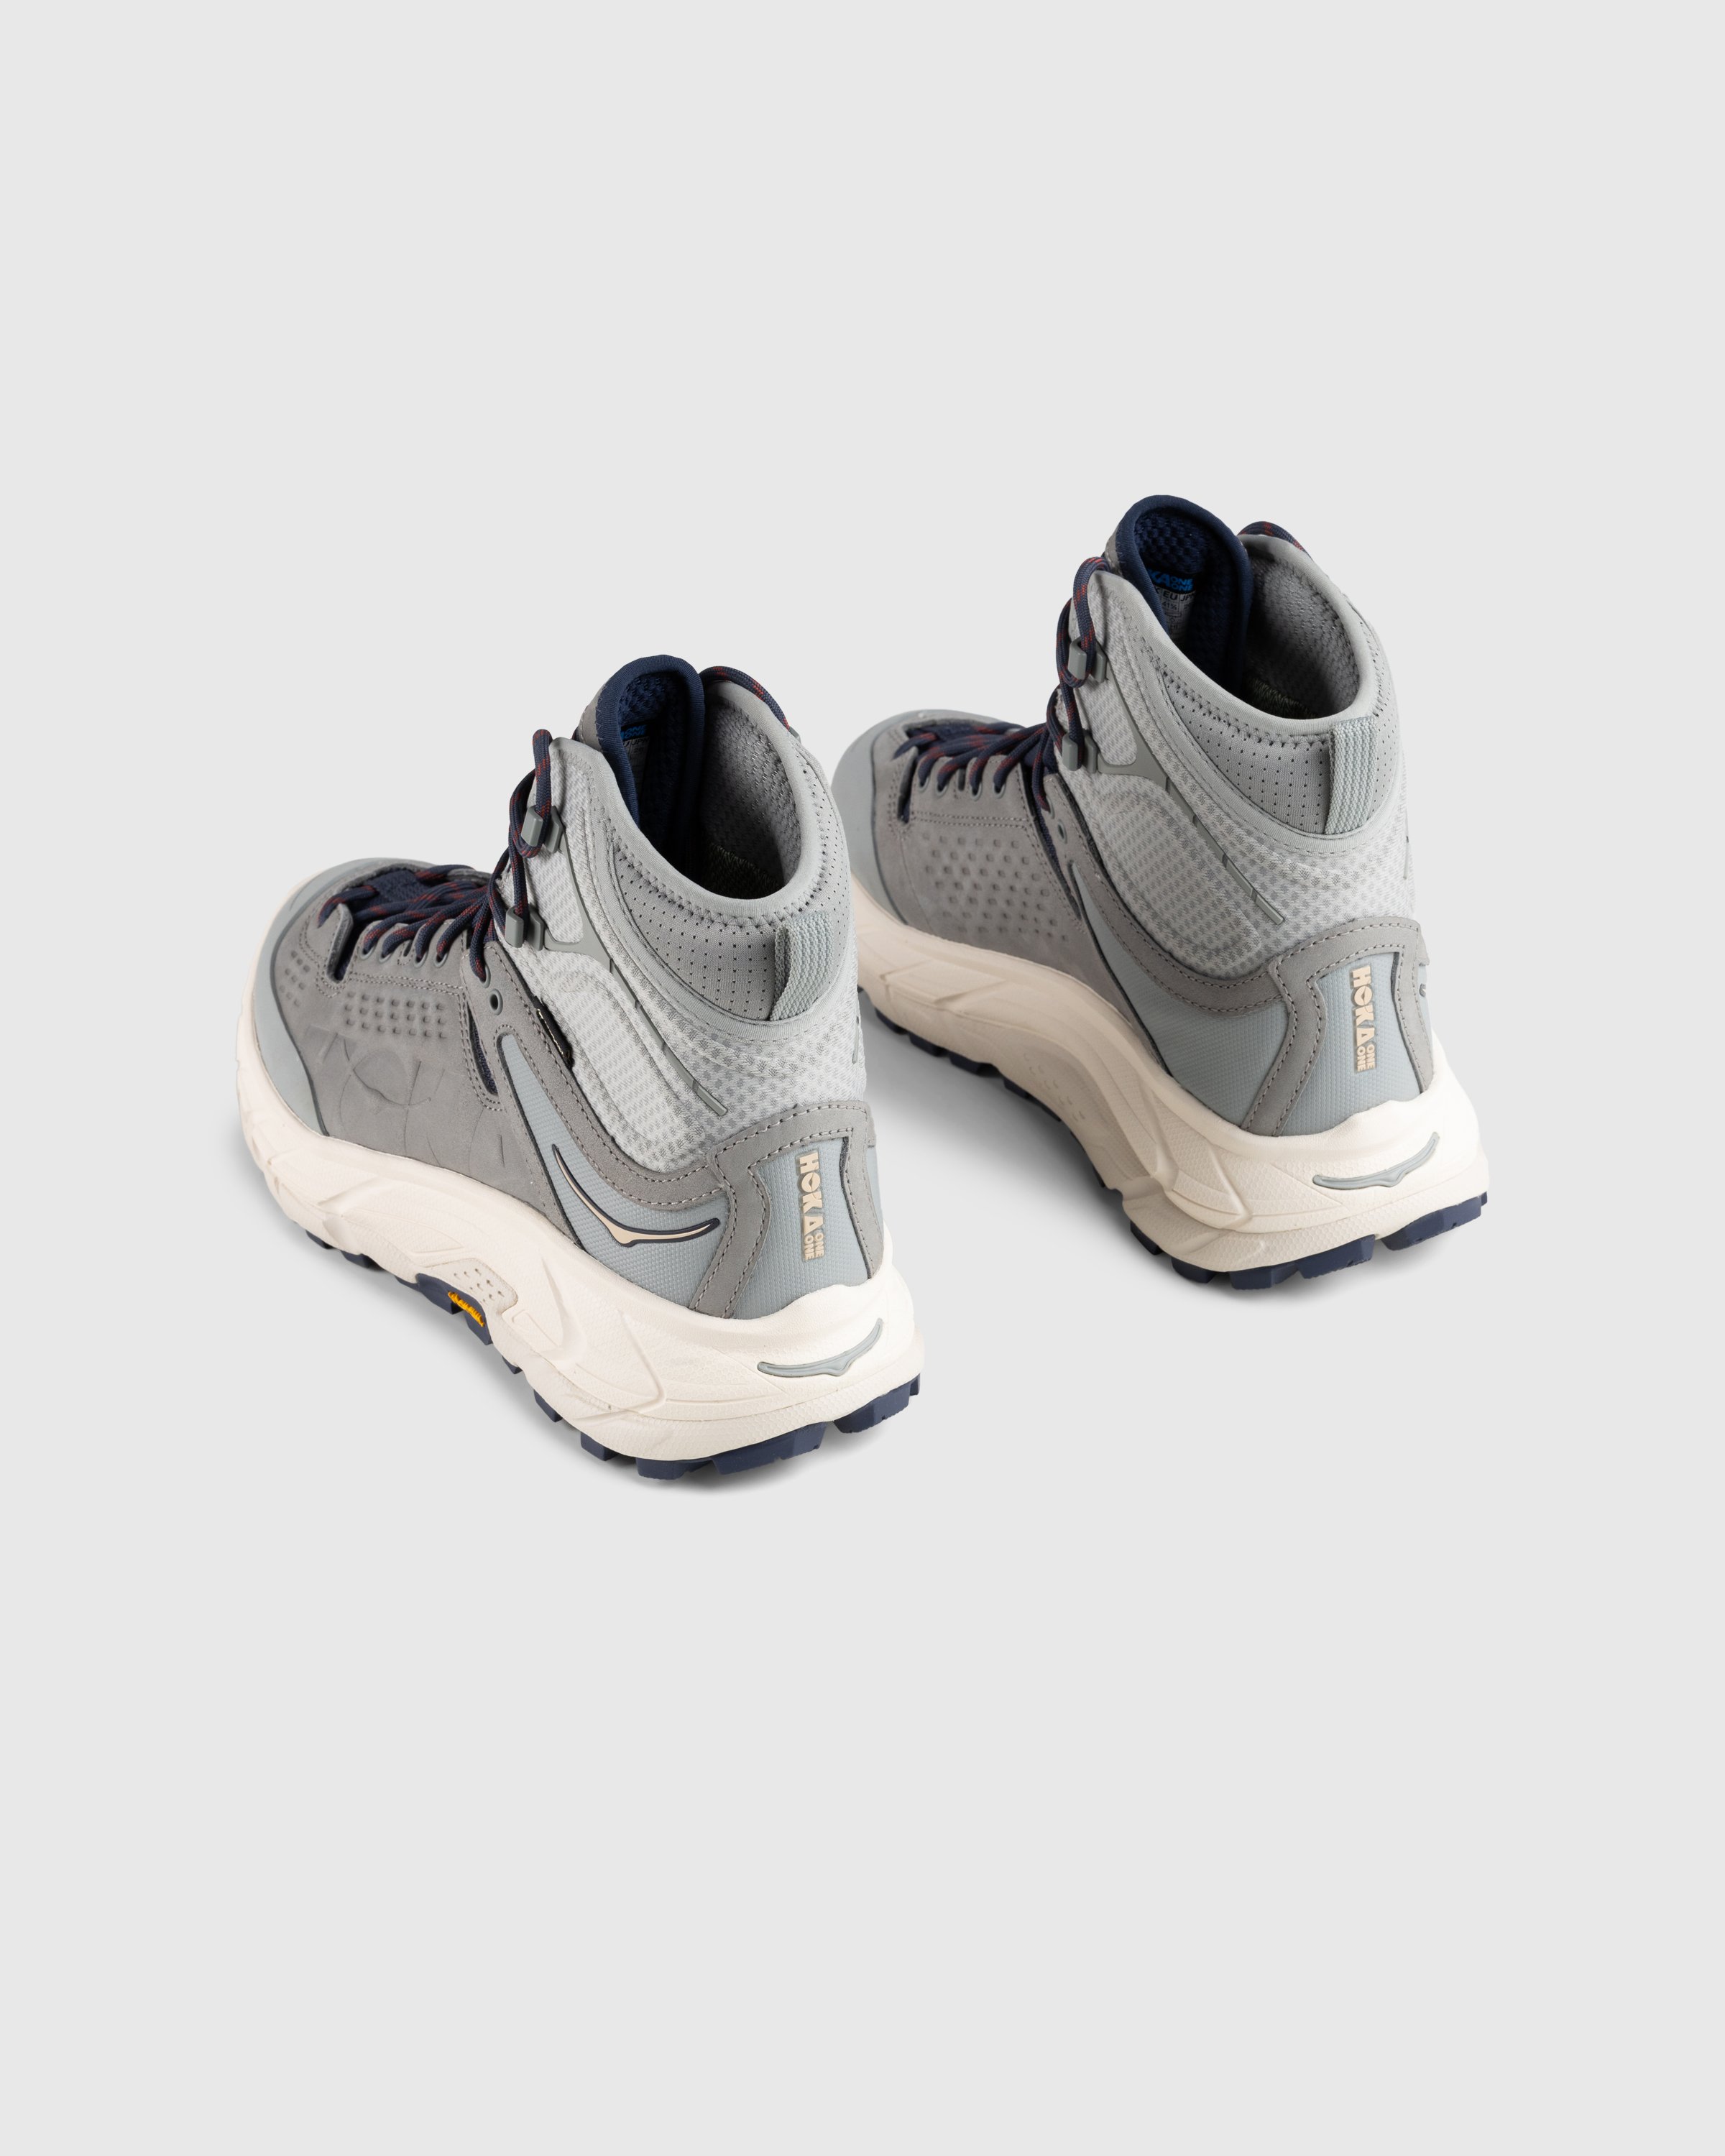 HOKA - Tor Ultra Hi Limestone/Shifting Sand - Footwear - Beige - Image 4